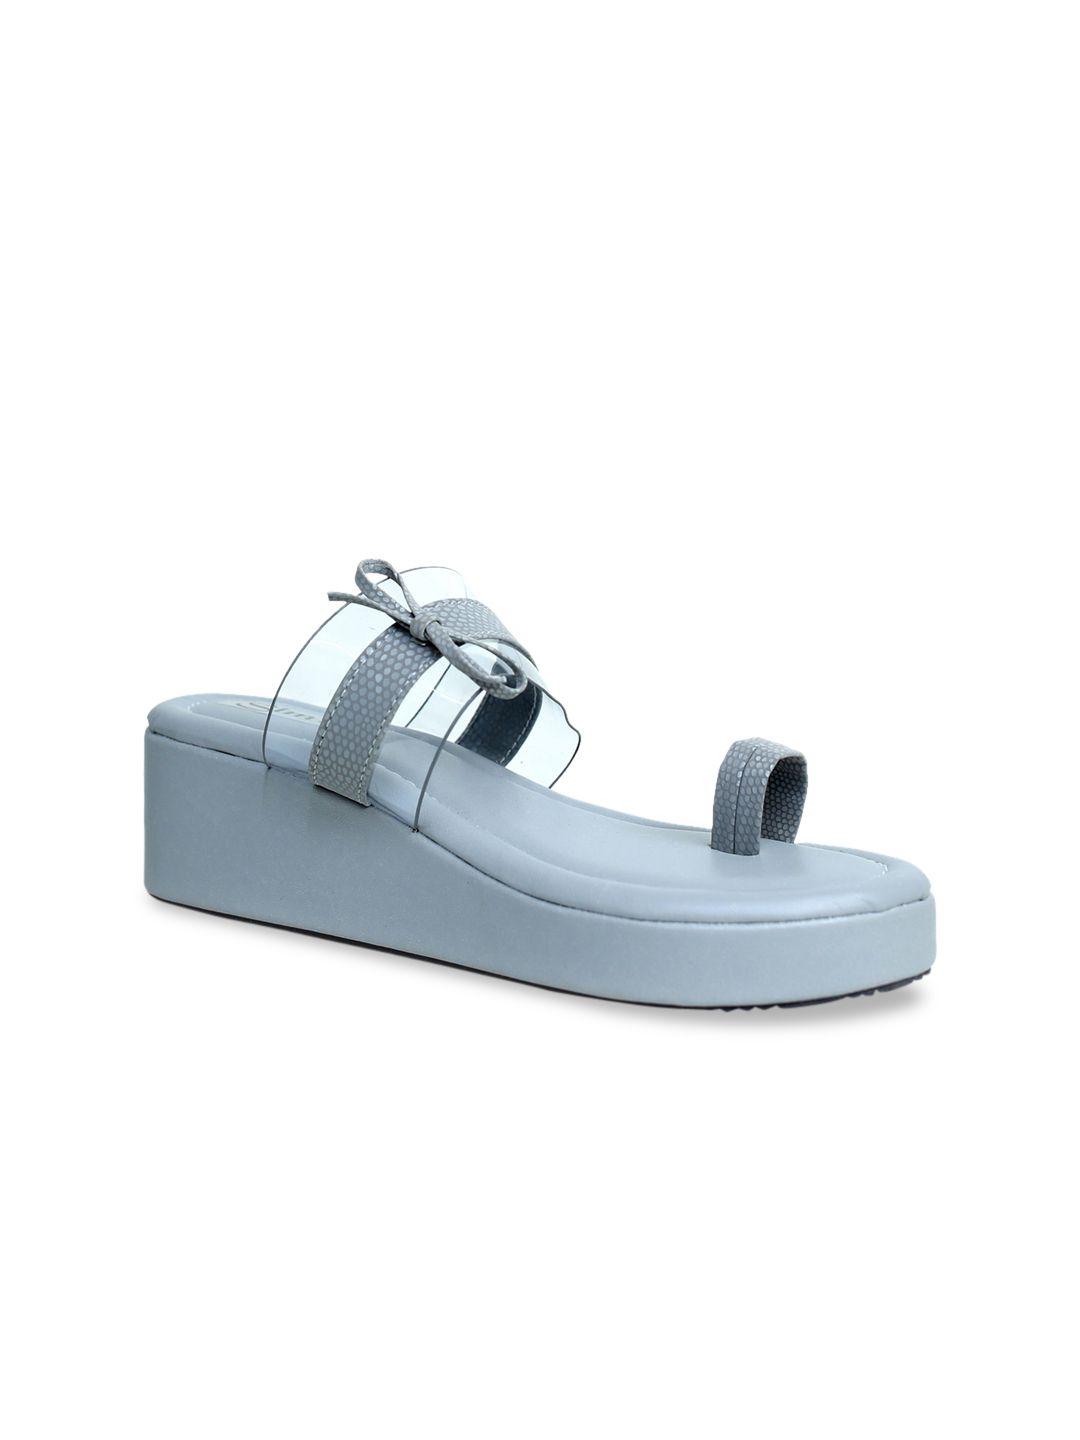 glitzy galz grey flatform sandals